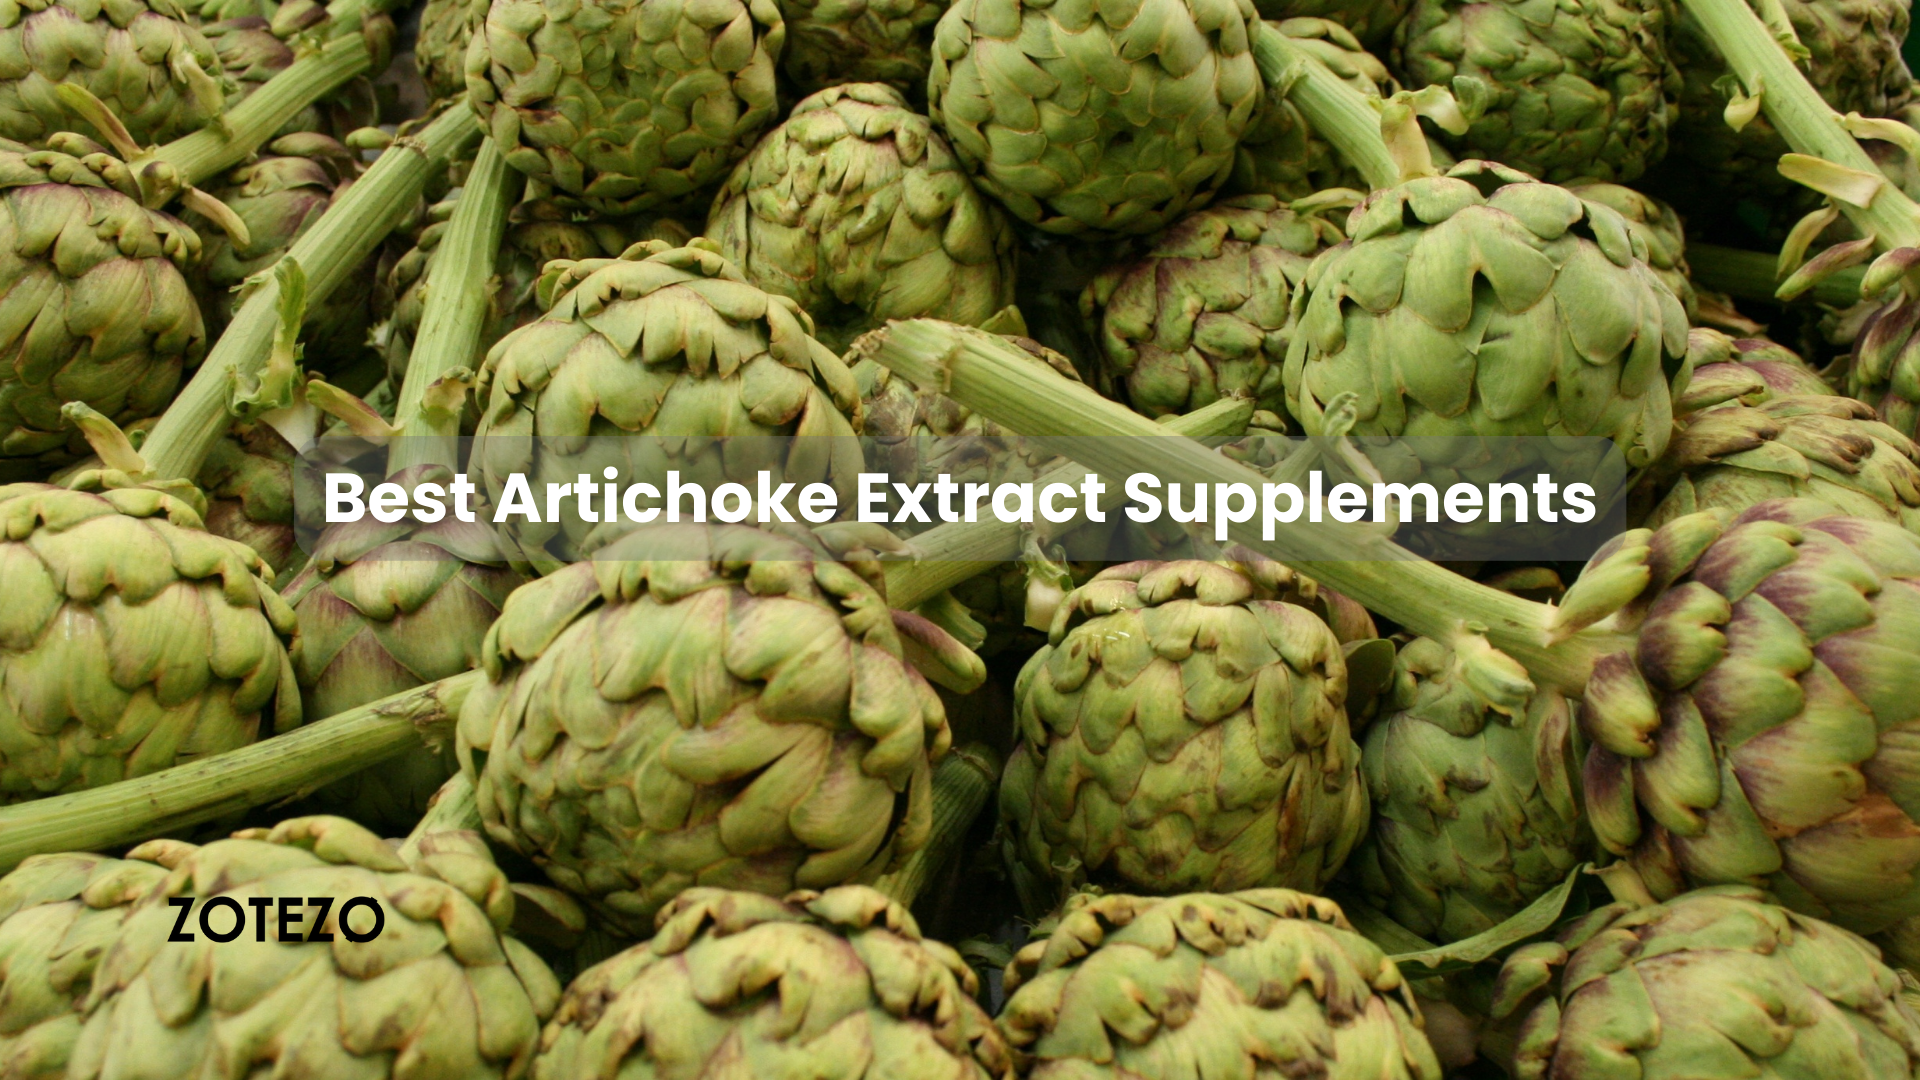 Artichoke Extract Supplements in India